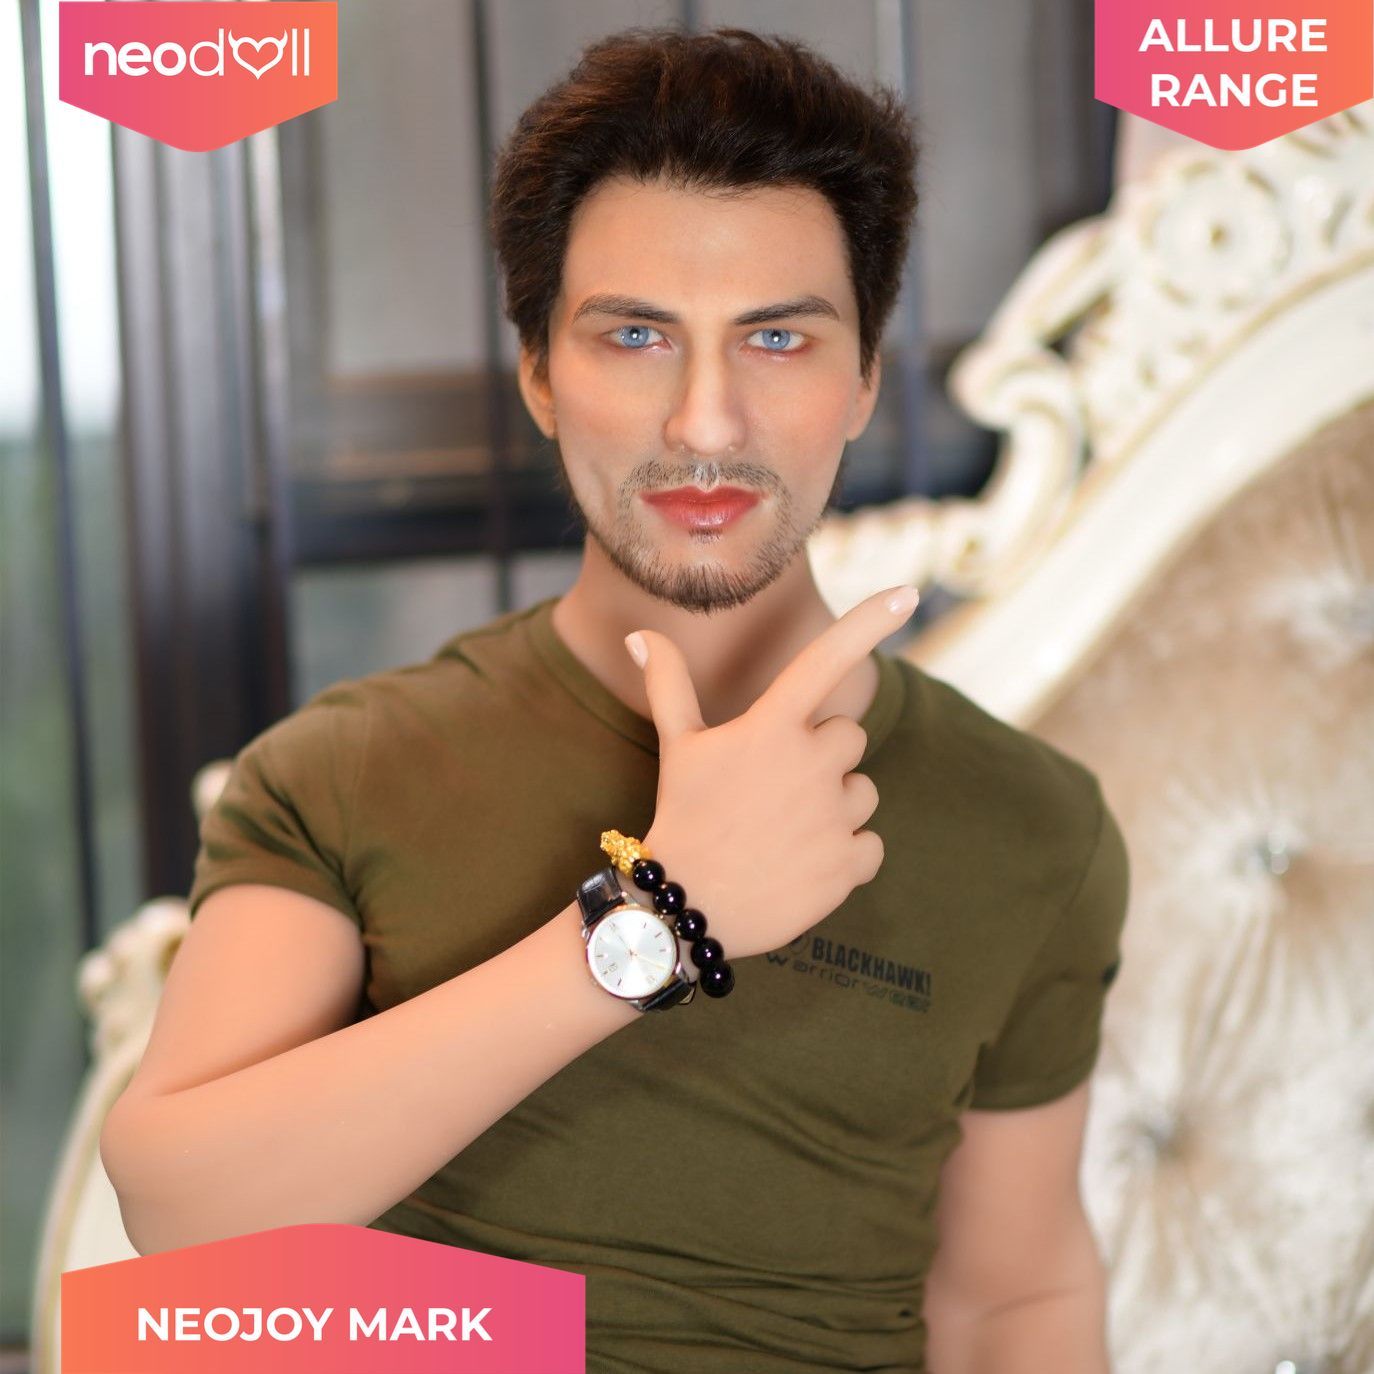 Neodoll Allure Mark - Realistic Male Sex Doll - 170cm - Tan - 23 cm Penis